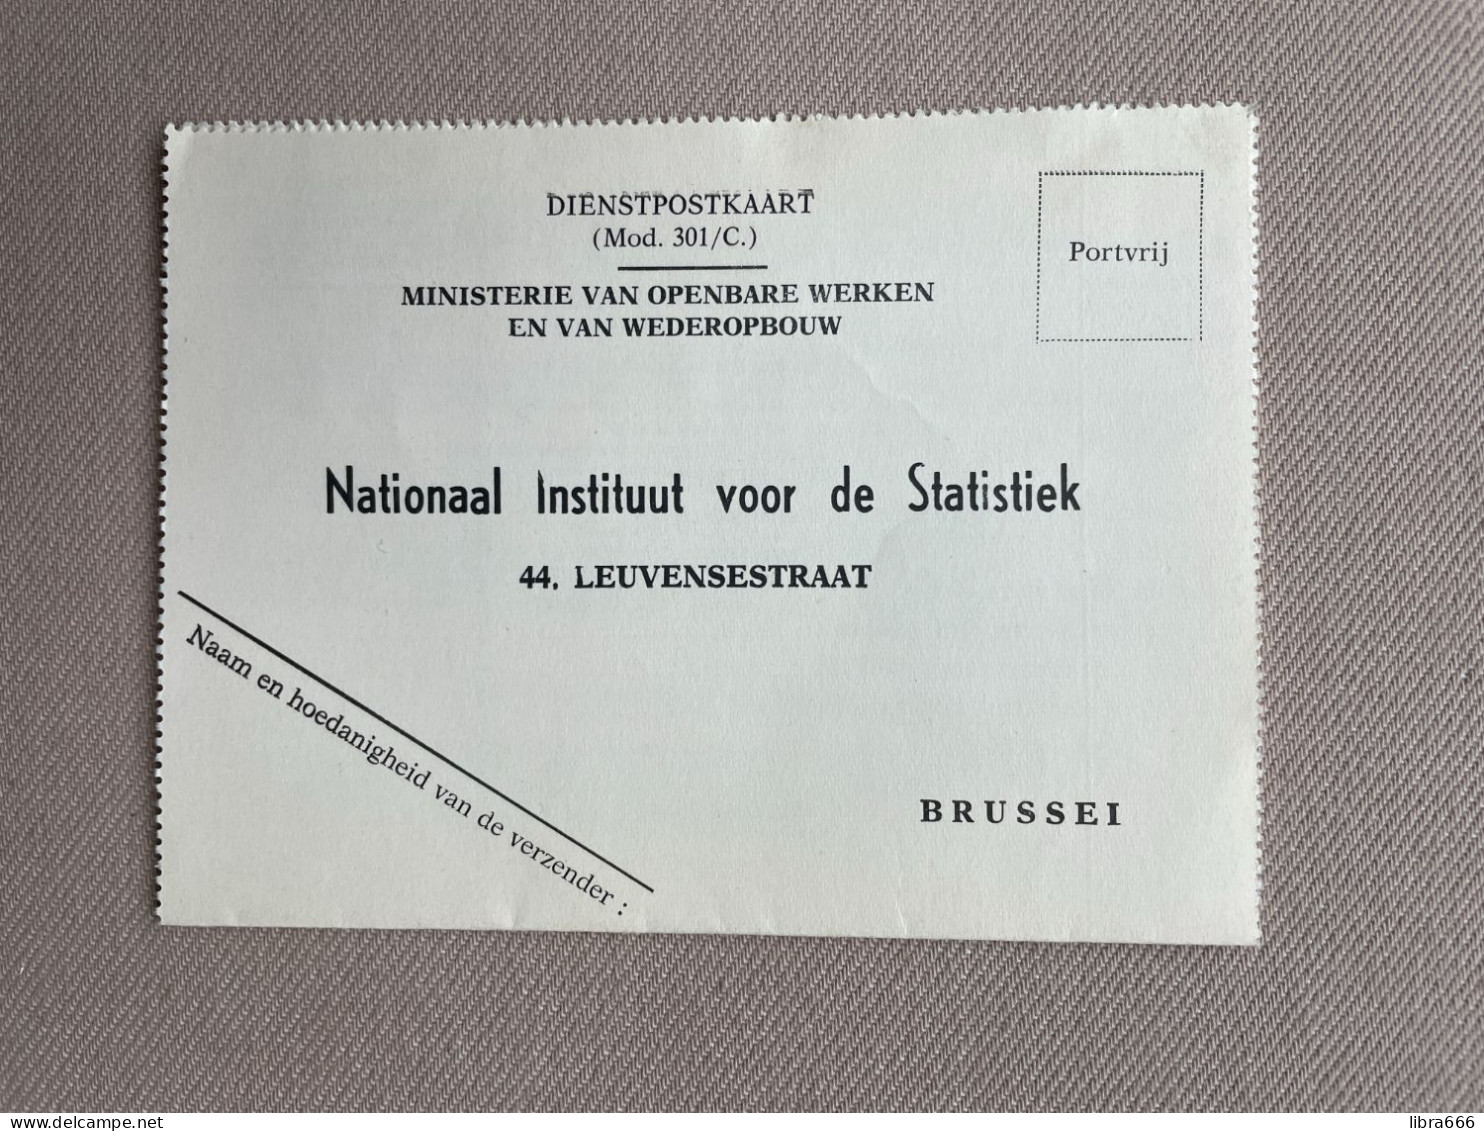 DIENSTPOSTKAART Mod. 301/C - 1963 - Ministerie Van Openbare Werken En Van Wederopbouw - NIS Brussel - Cartes Postales 1951-..